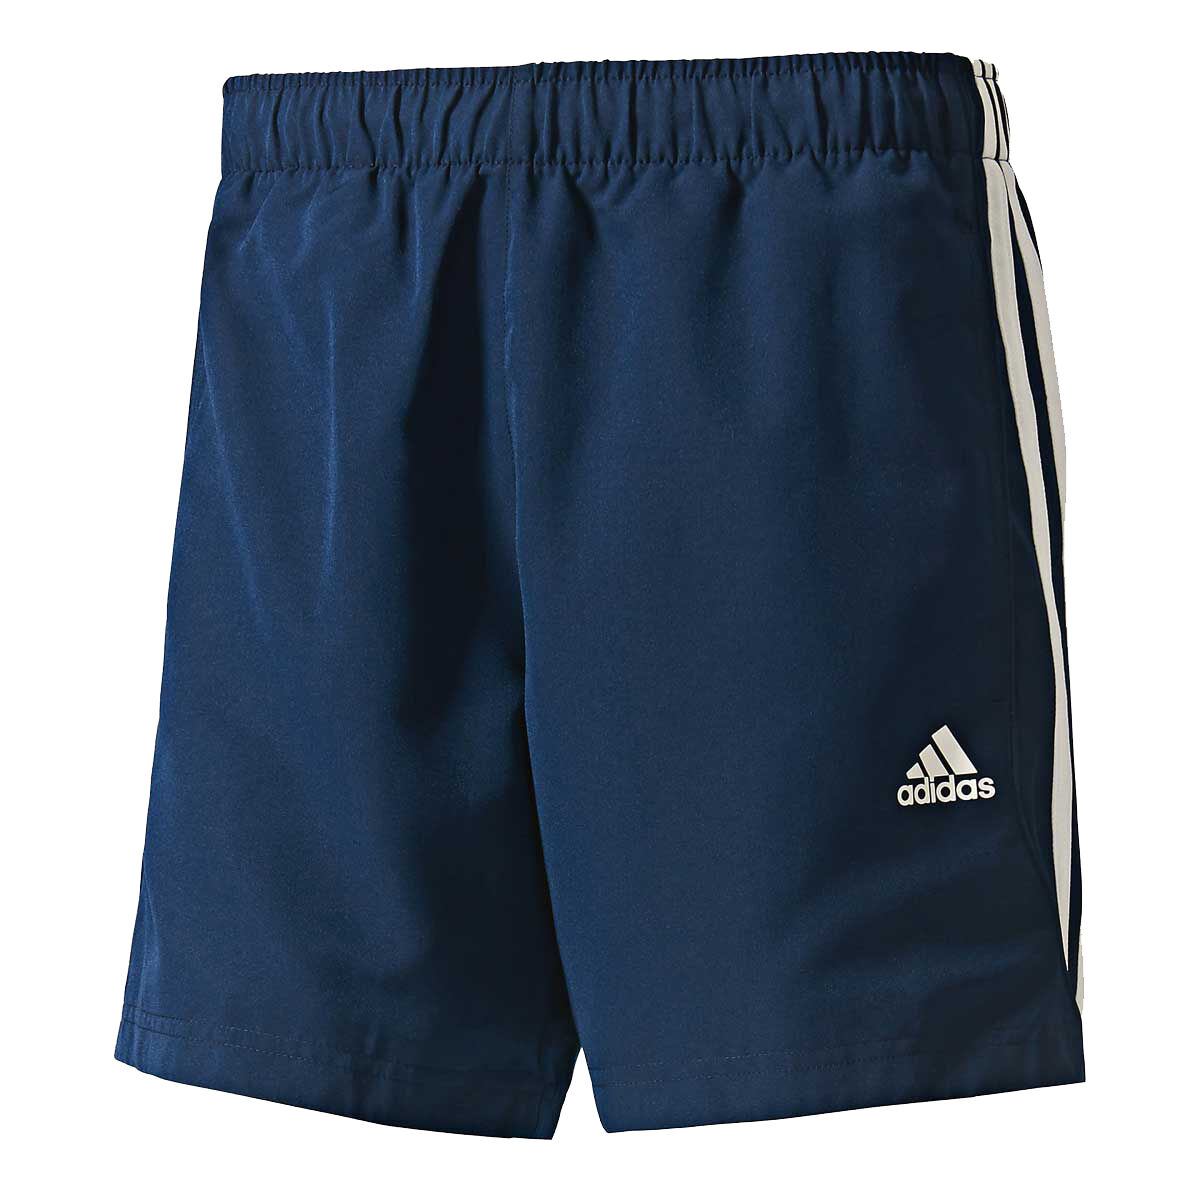 adidas with shorts